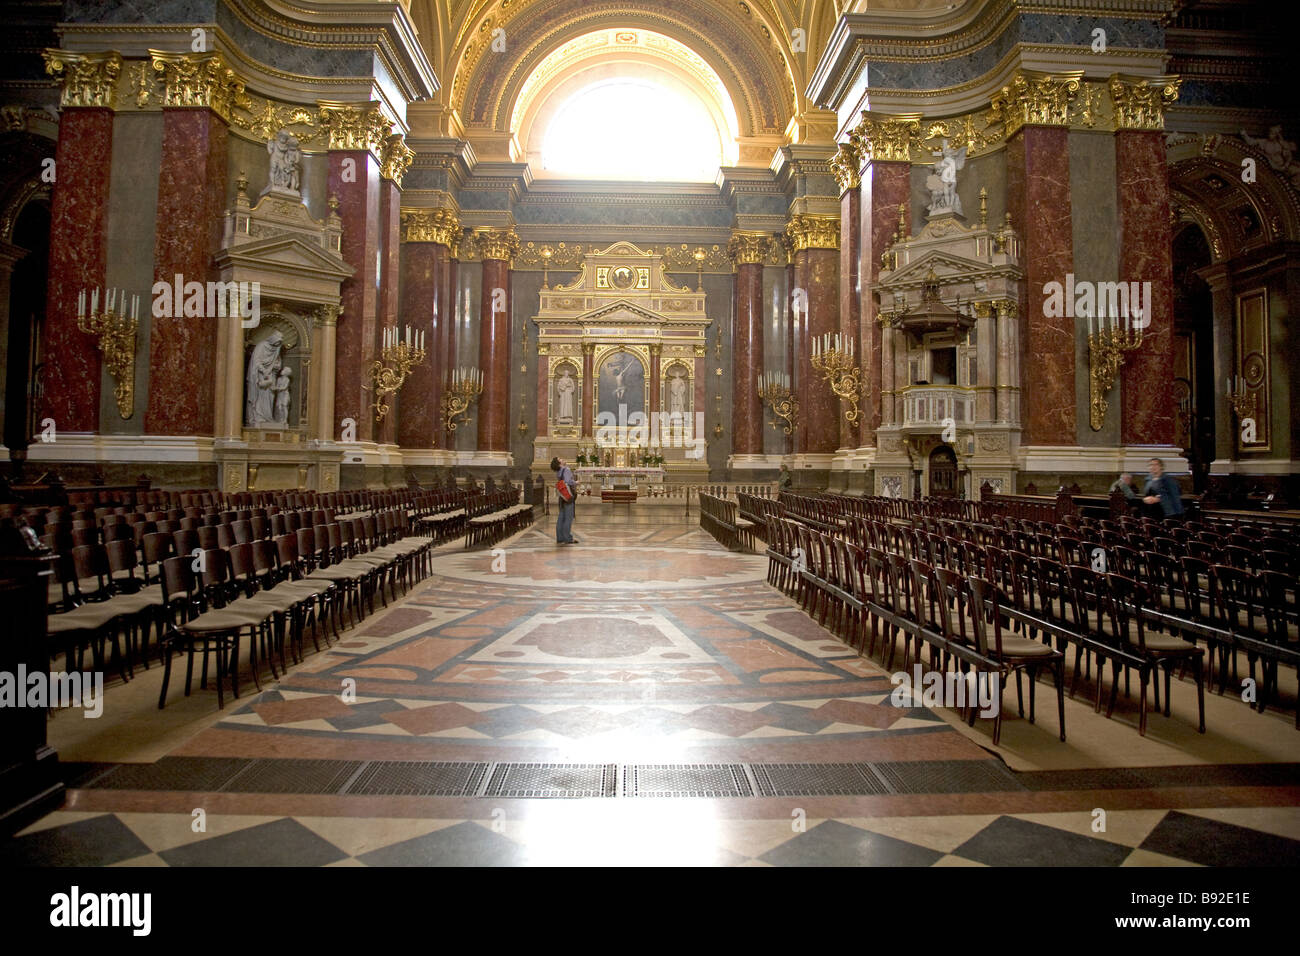 Interior of St Stephen s Basilica Szent Istvan Bazilika in Budapest Stock Photo